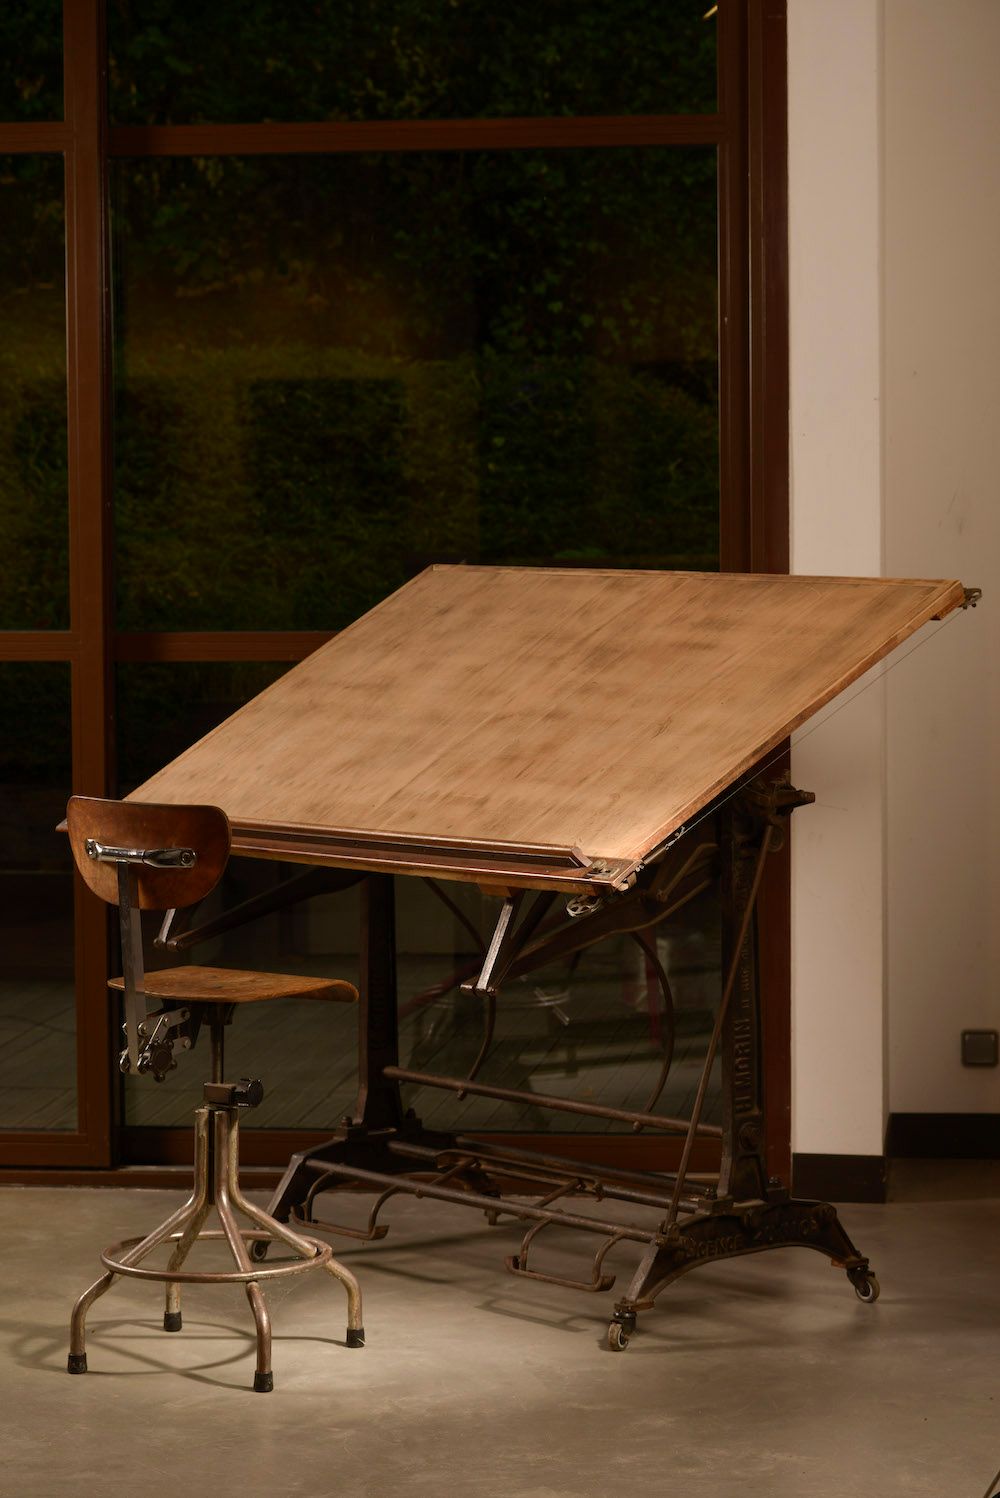 Null 大型建筑师桌，木制桌面，金属底座和机械装置，署名H.MORIN，11 rue Dulong Paris（加了脚轮）。

高度 : 134 cm - 宽&hellip;